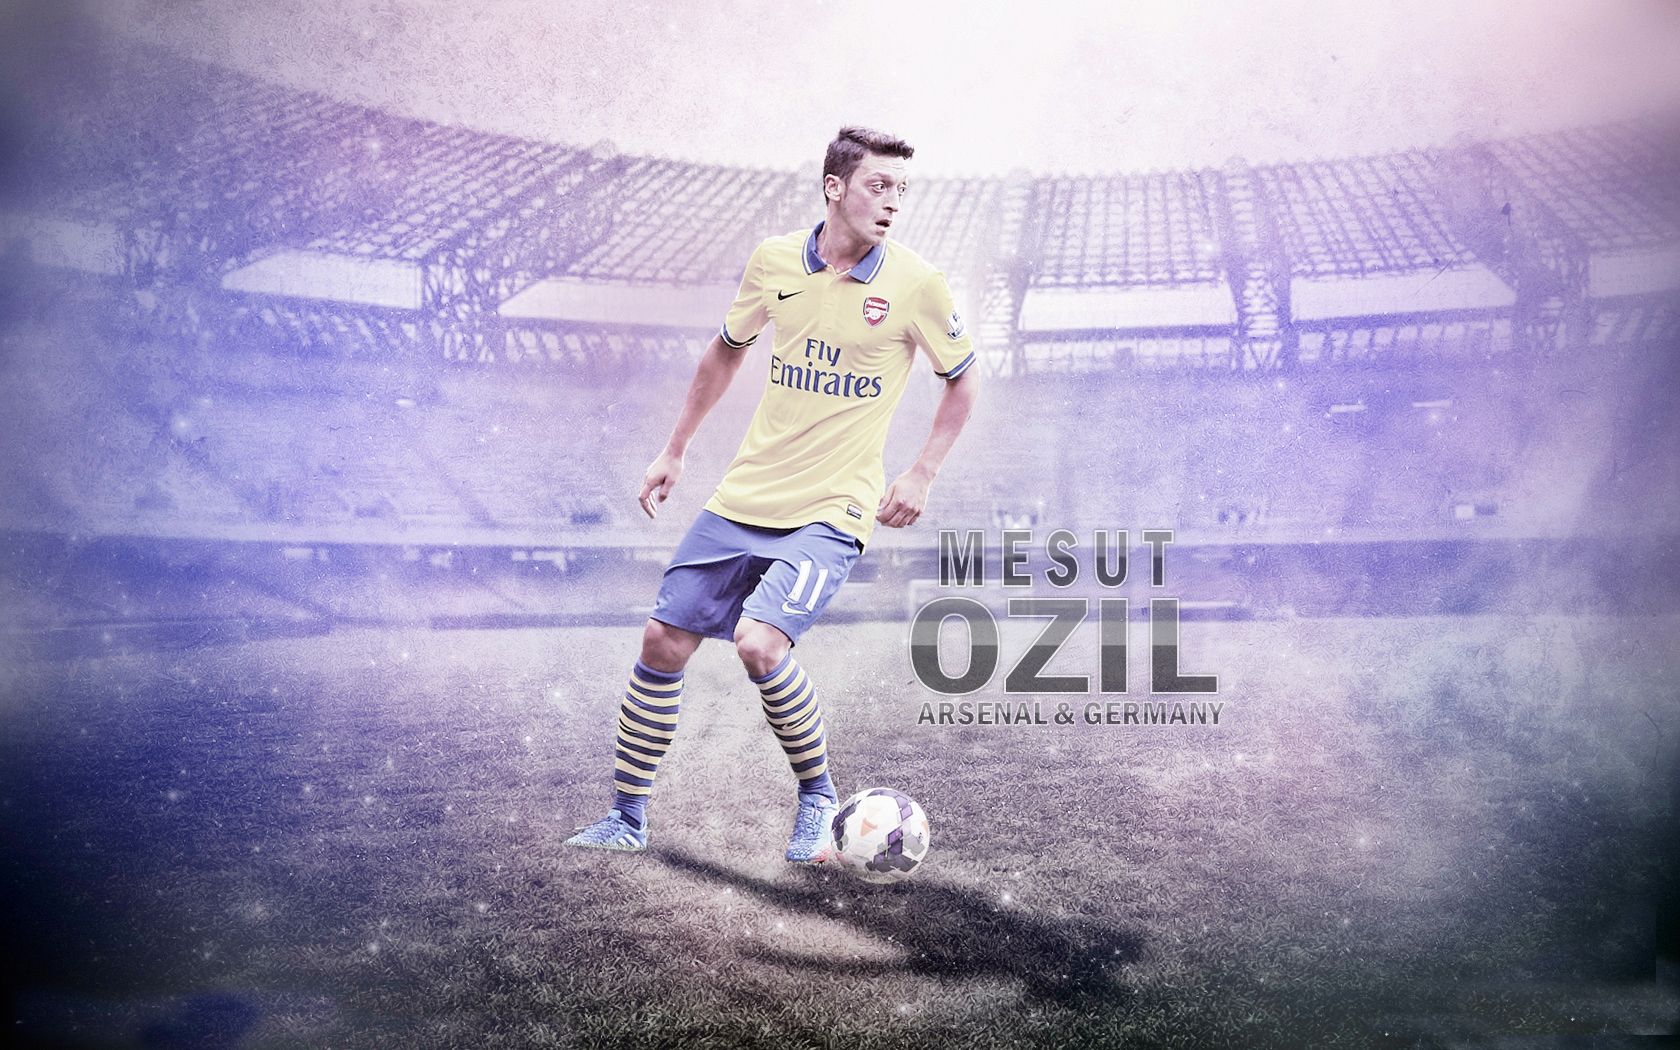 Mesut Özil Wallpaper HD | Wallpapers, Backgrounds, Images, Art Photos.